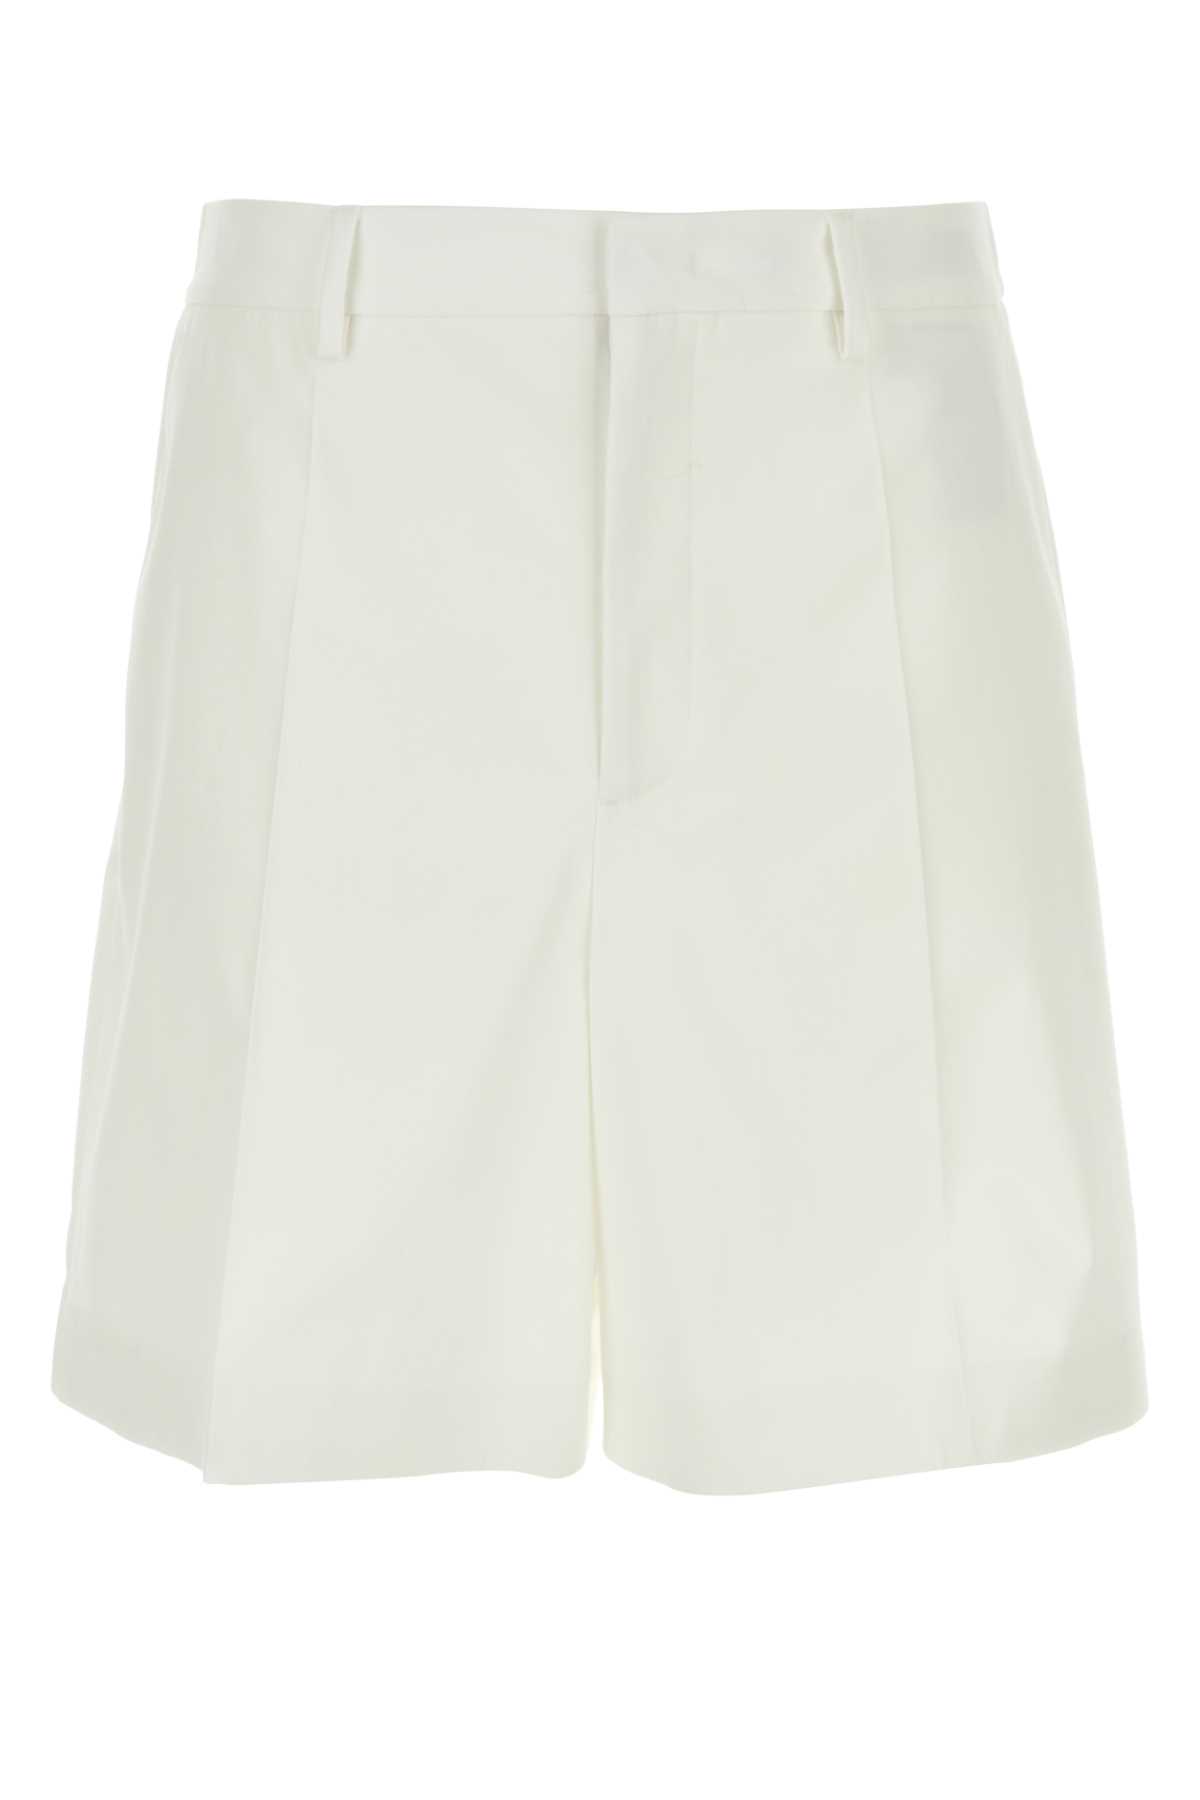 White Cotton Bermuda Shorts